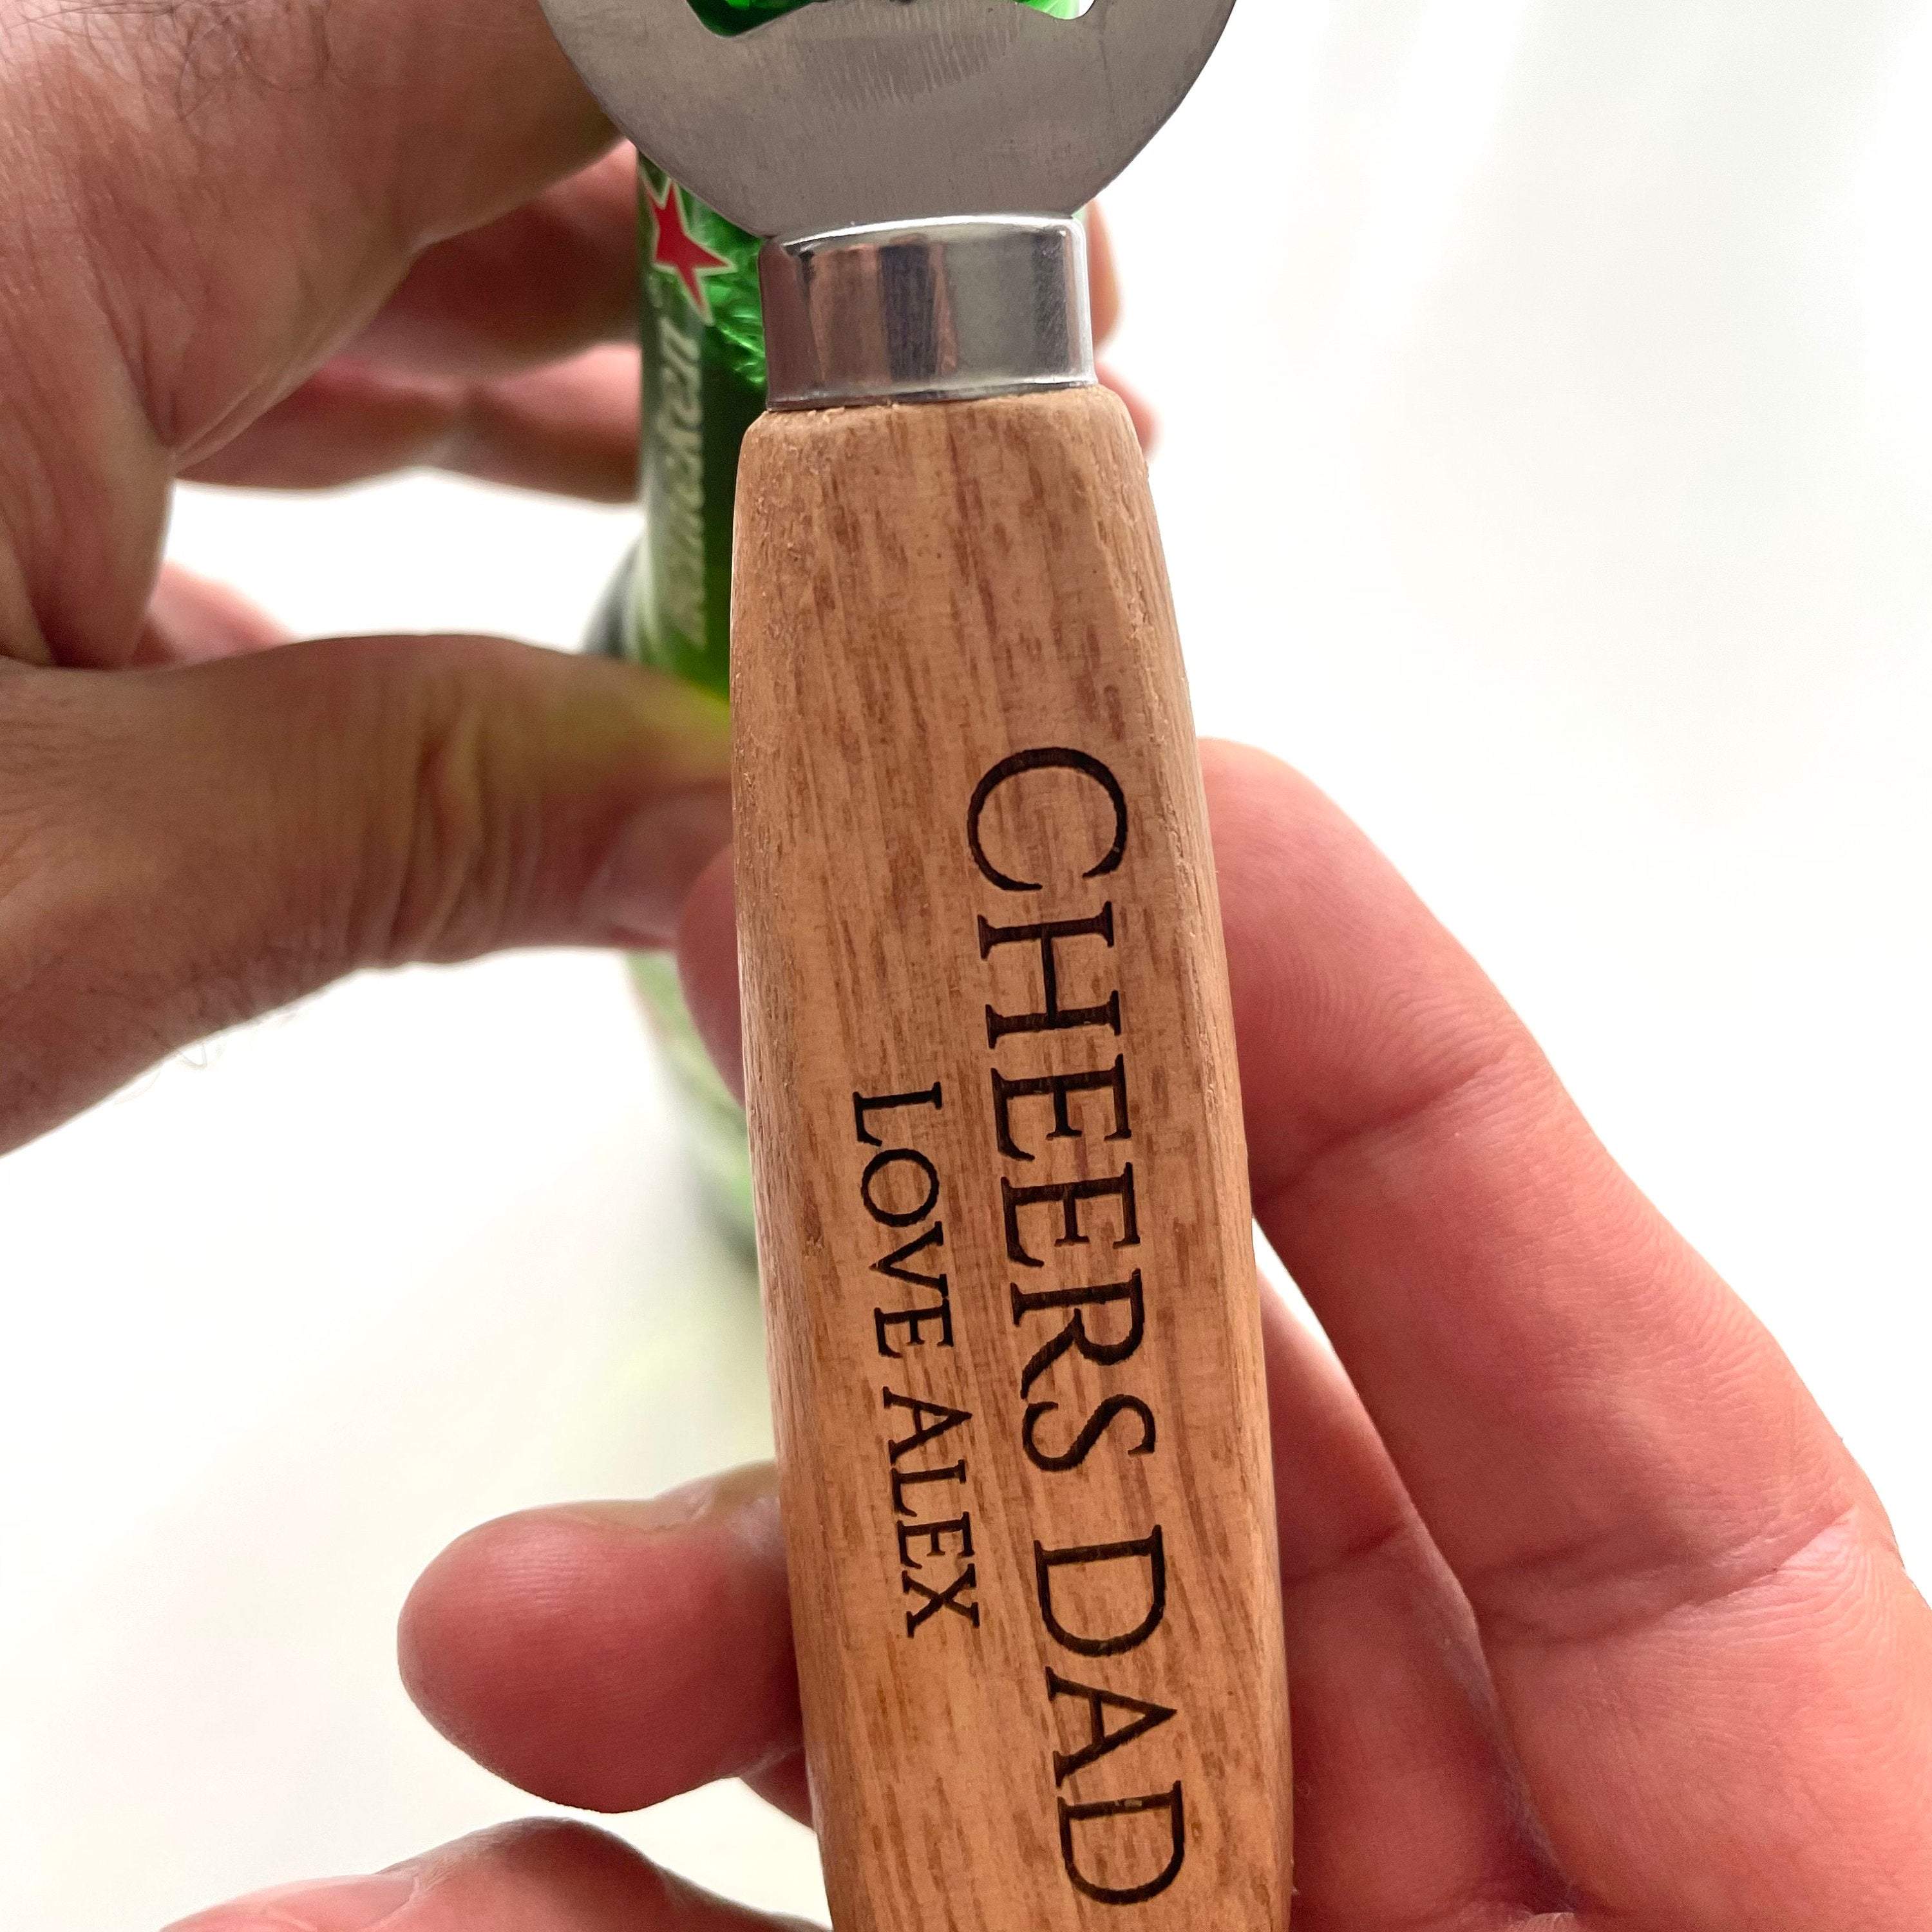 Personalised engraved wooden bottle opener, Gift for him, Birthday gift